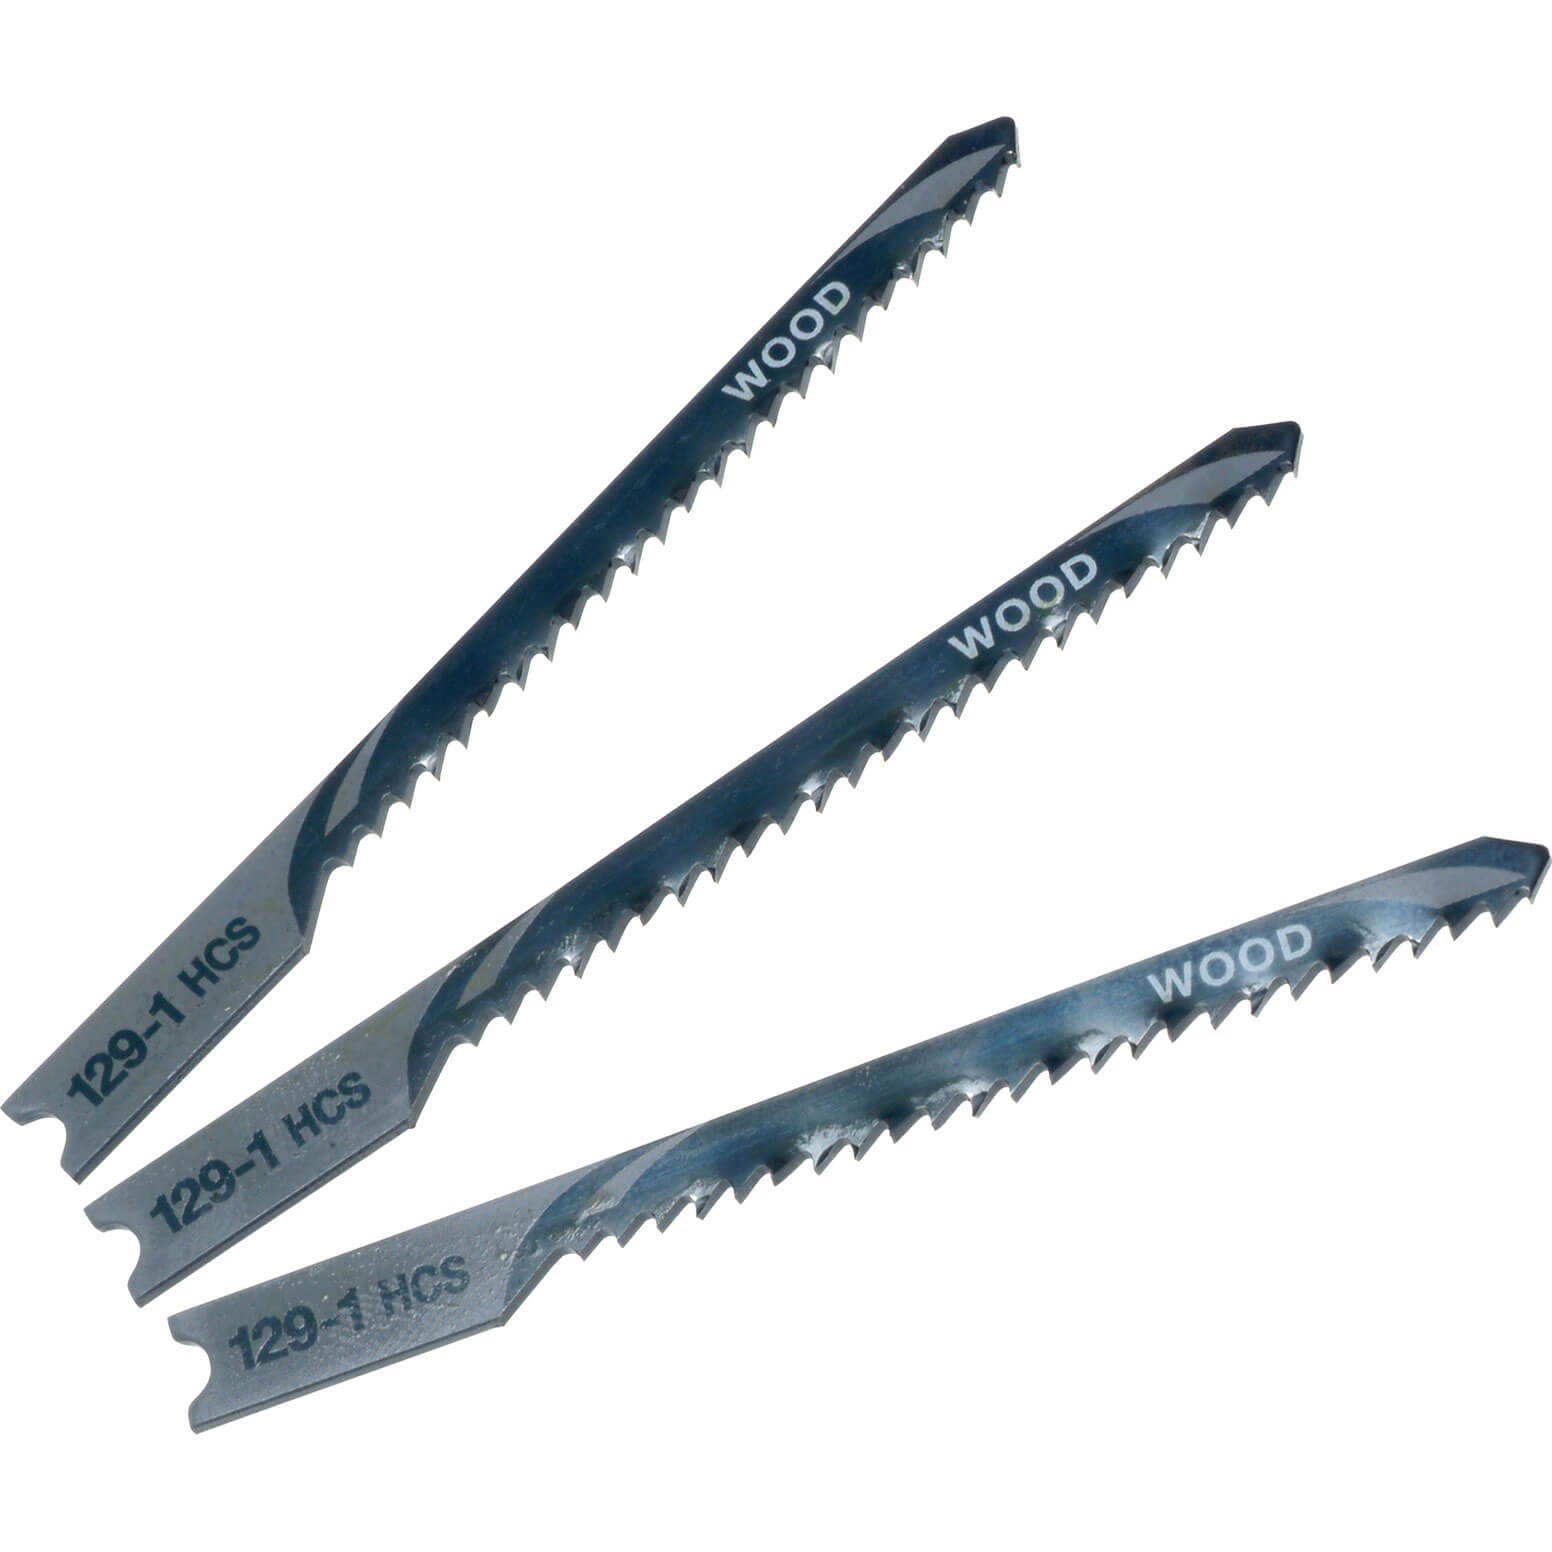 Black and Decker X23003 Piranha Wood HCS Curved U Shank Jigsaw Blades